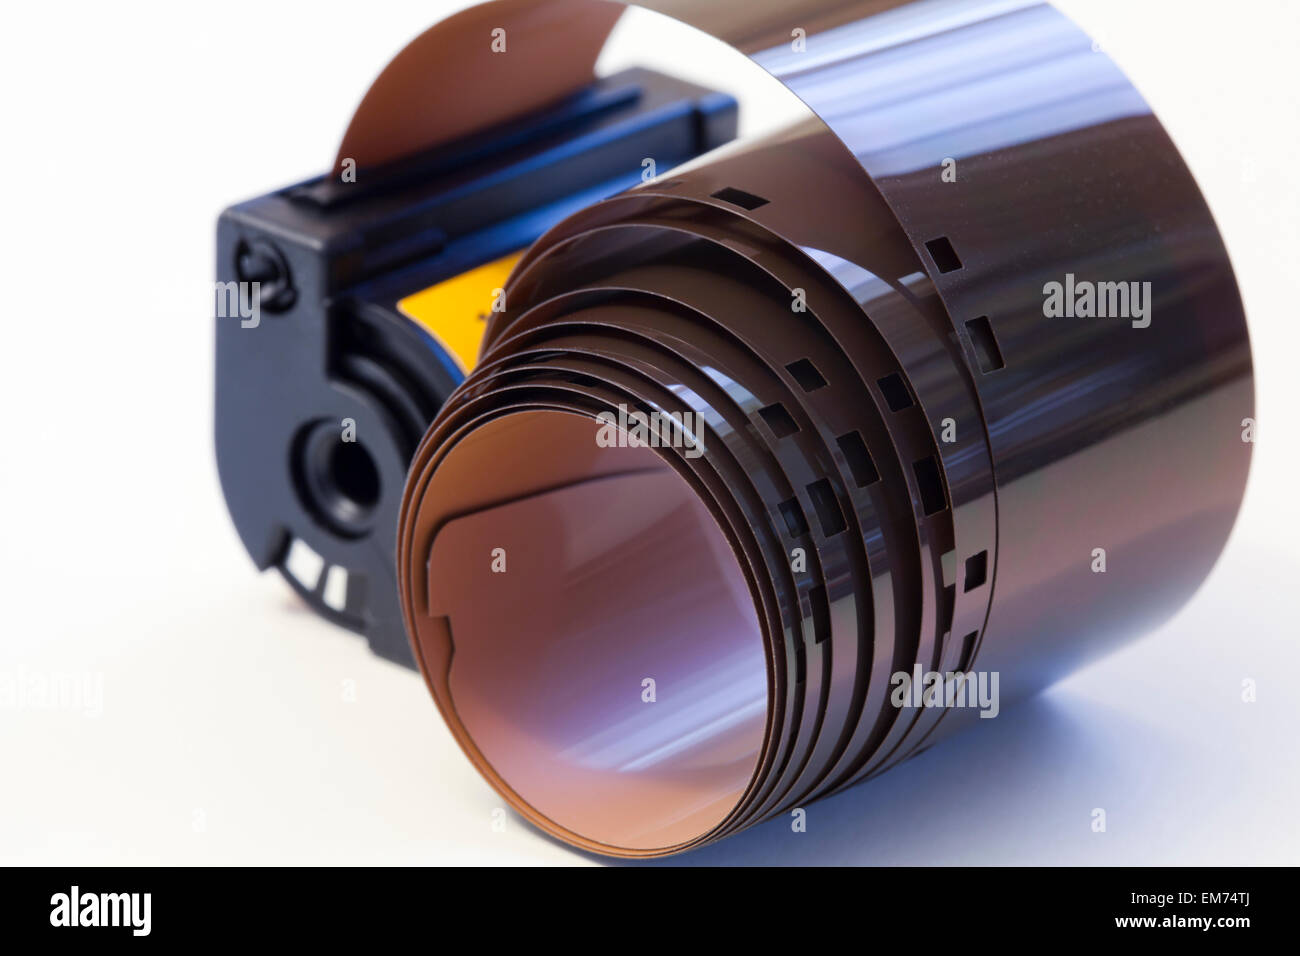 Kodak Advantix APS camera film - USA Stock Photo - Alamy